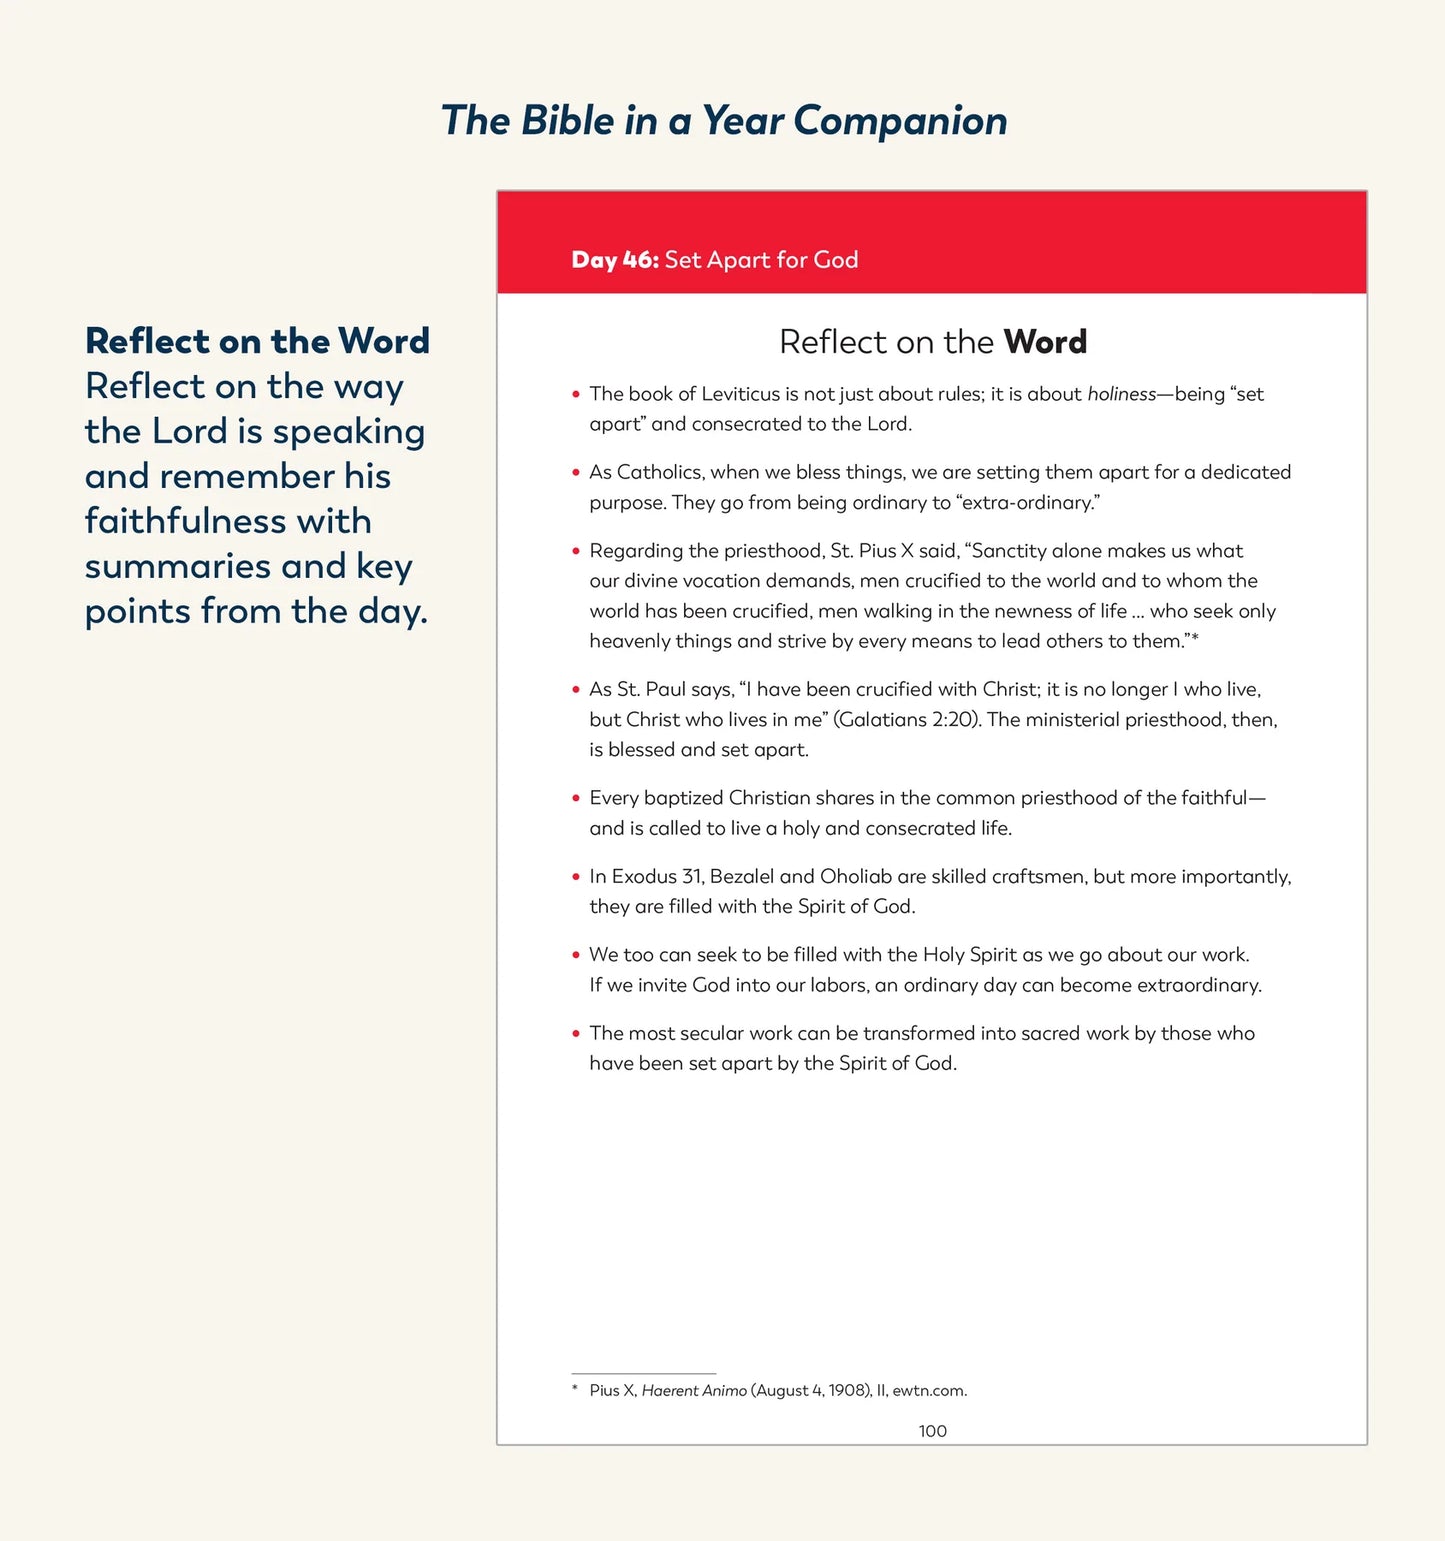 The Bible in a Year Companion Volume II